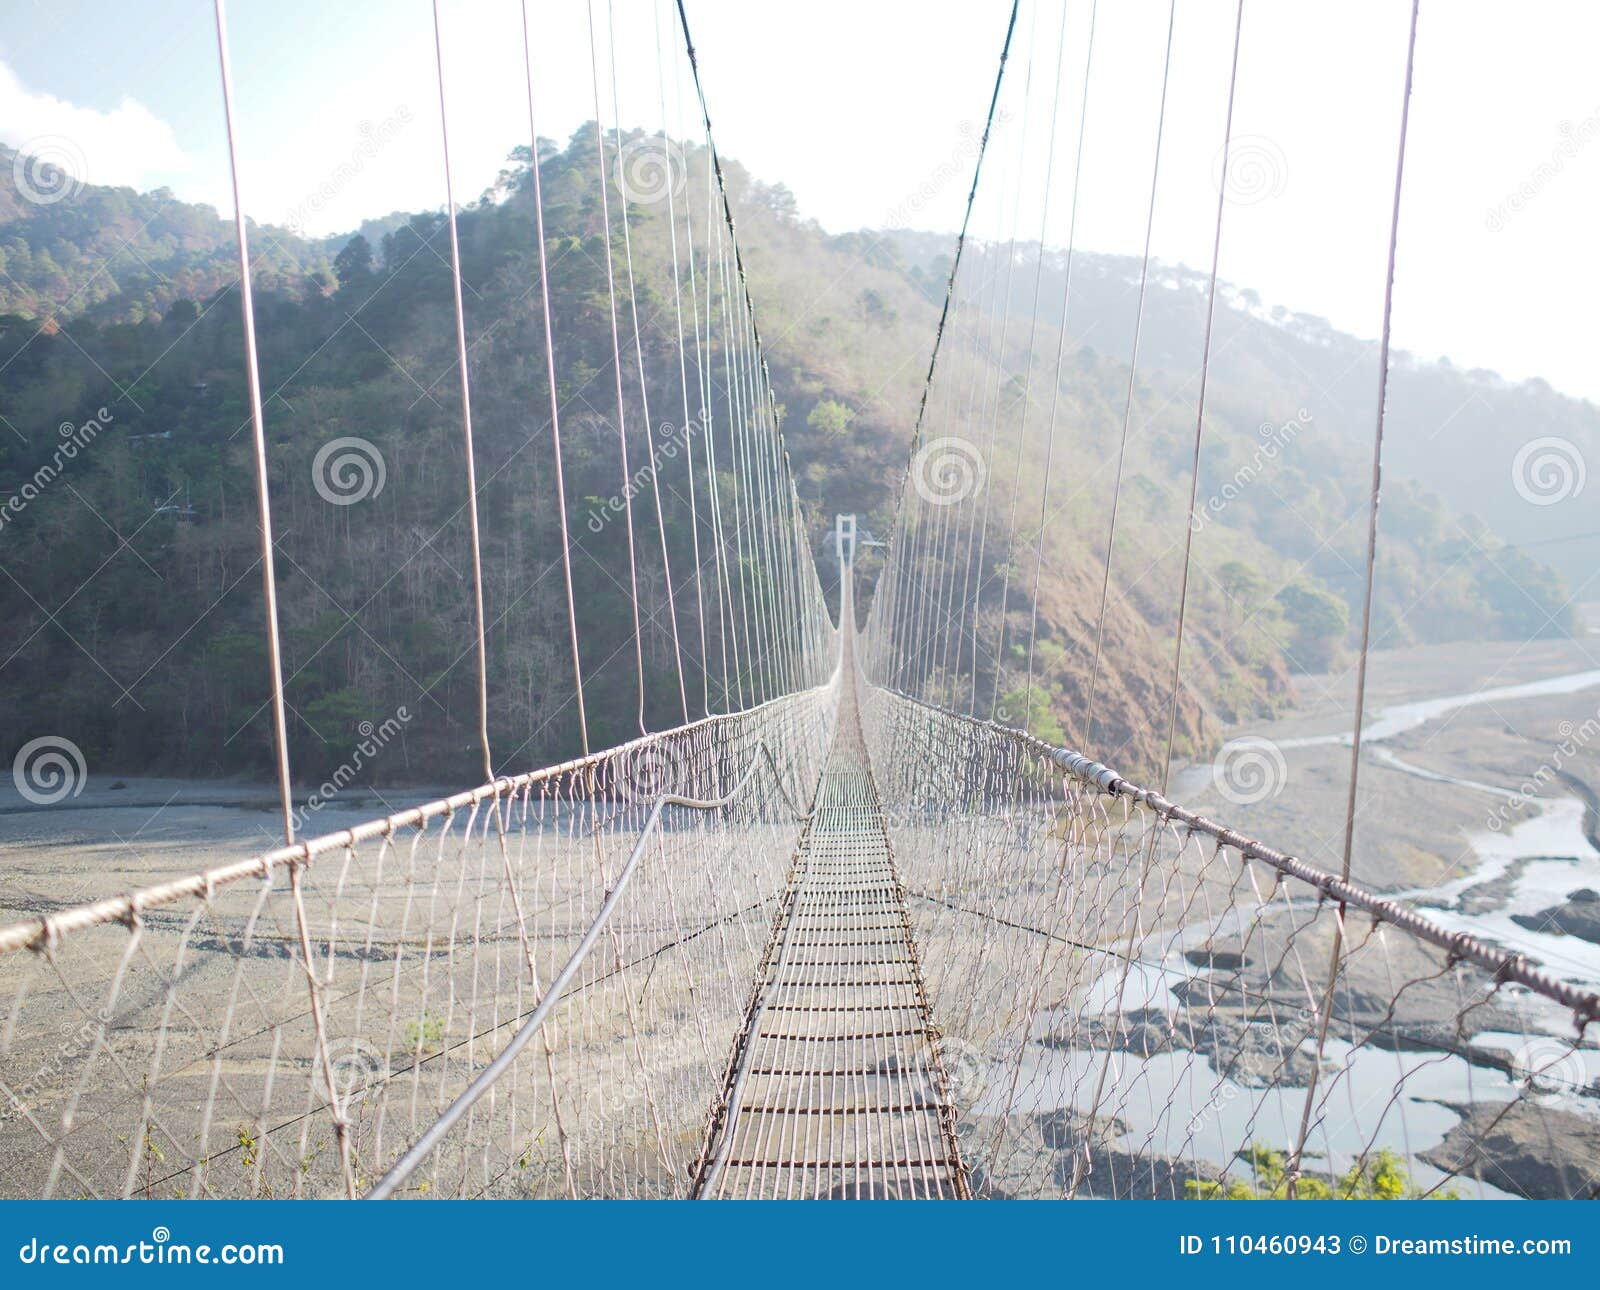 jangjang hanging bridge at bokod, benguet